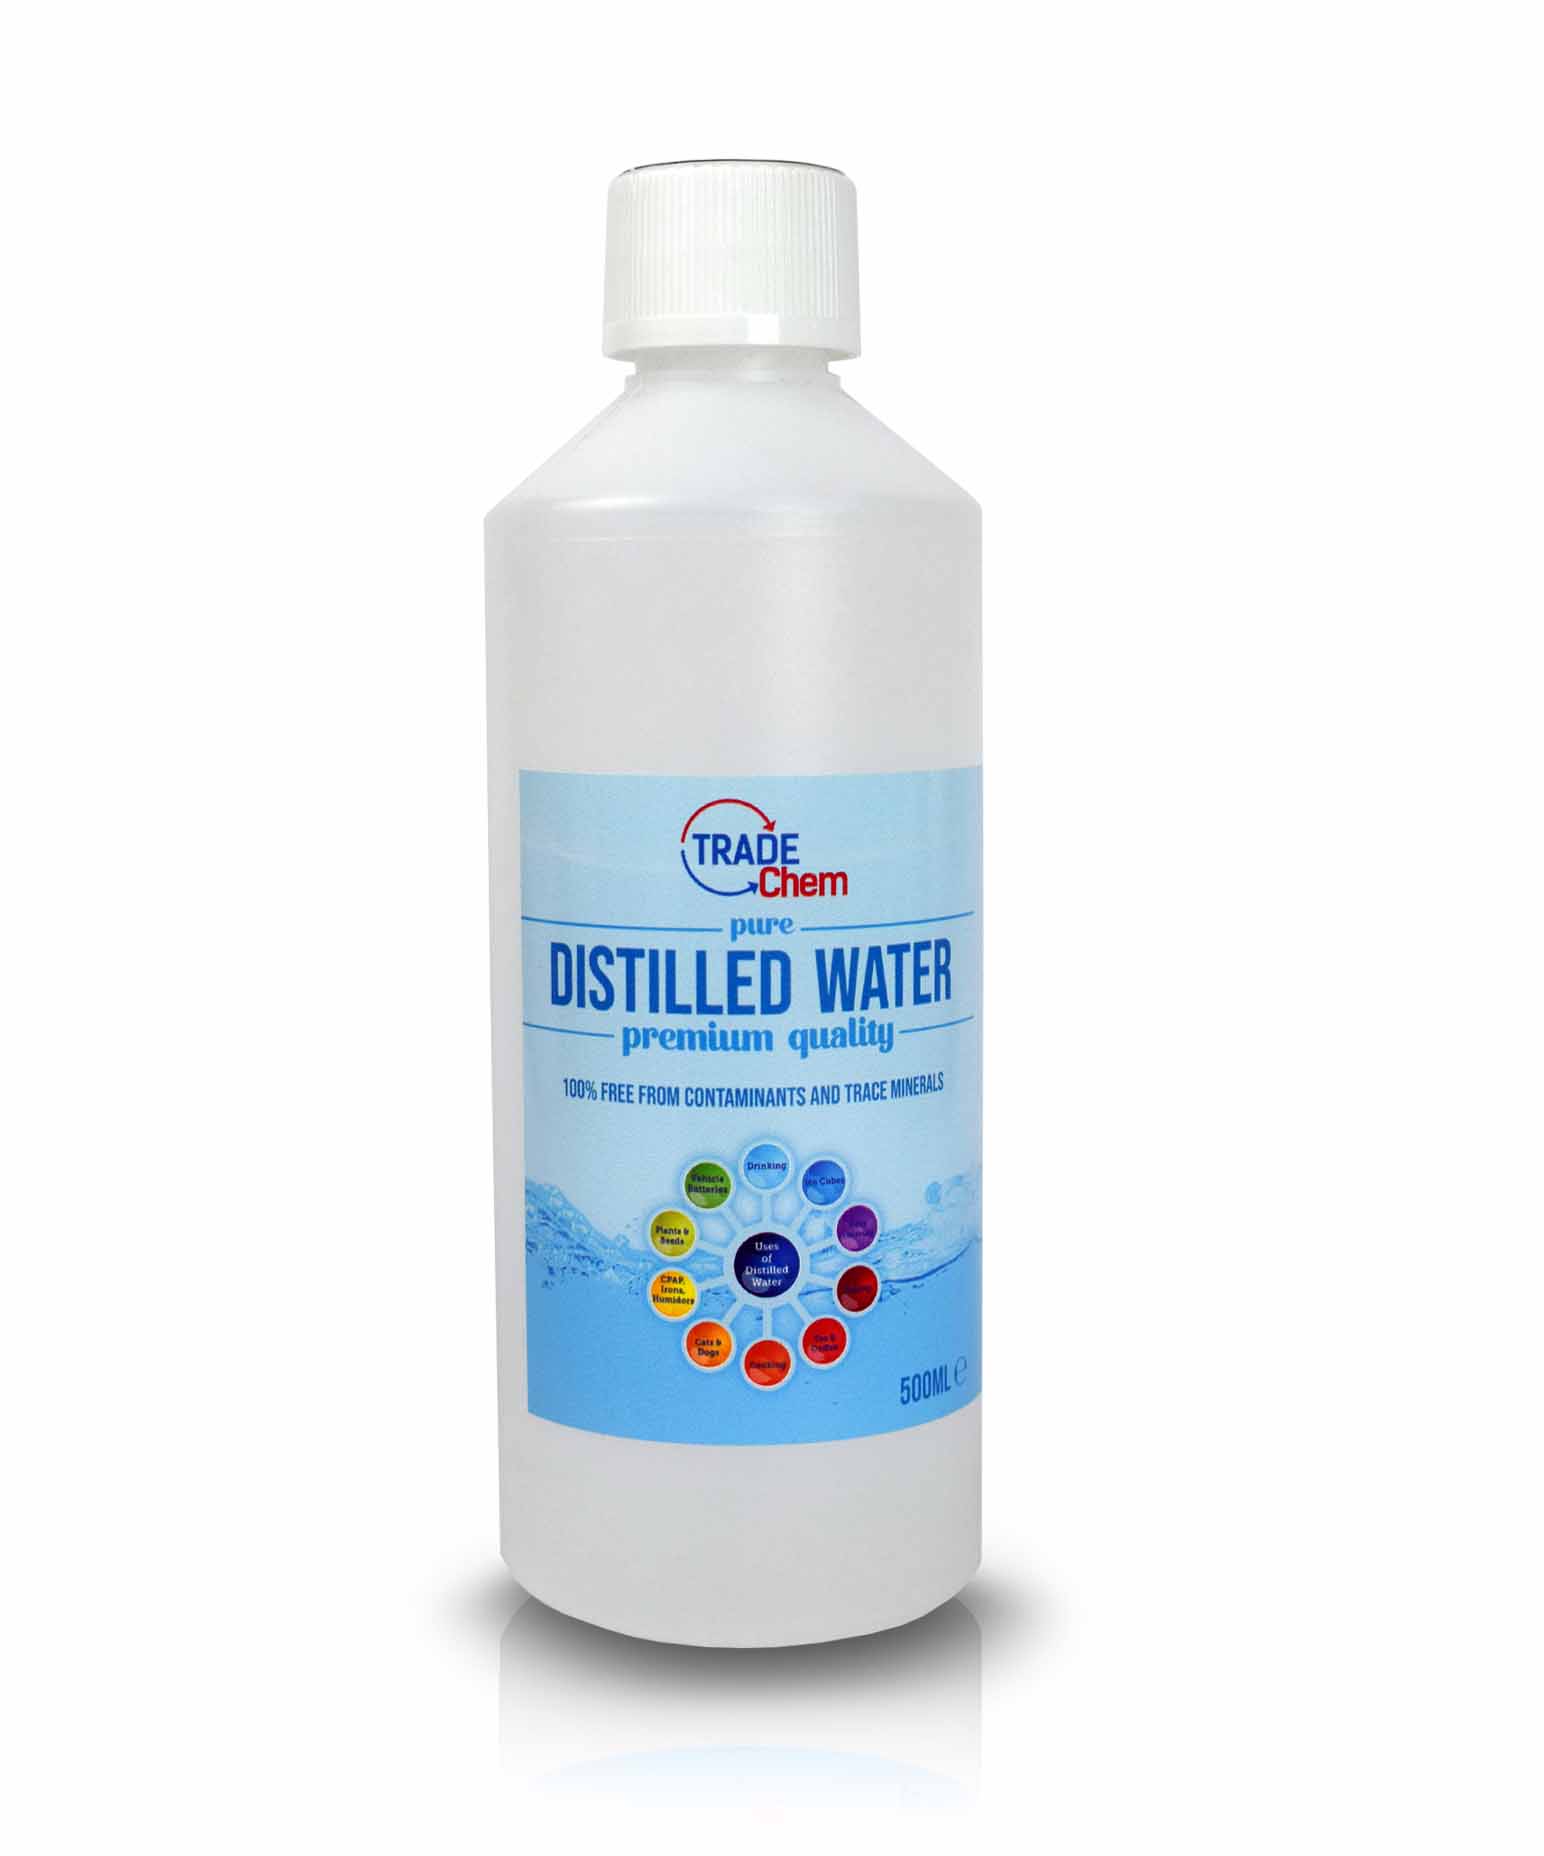 https://trade-chem.co.uk/wp-content/uploads/2018/02/Distilled-Water-500ml-1.jpg